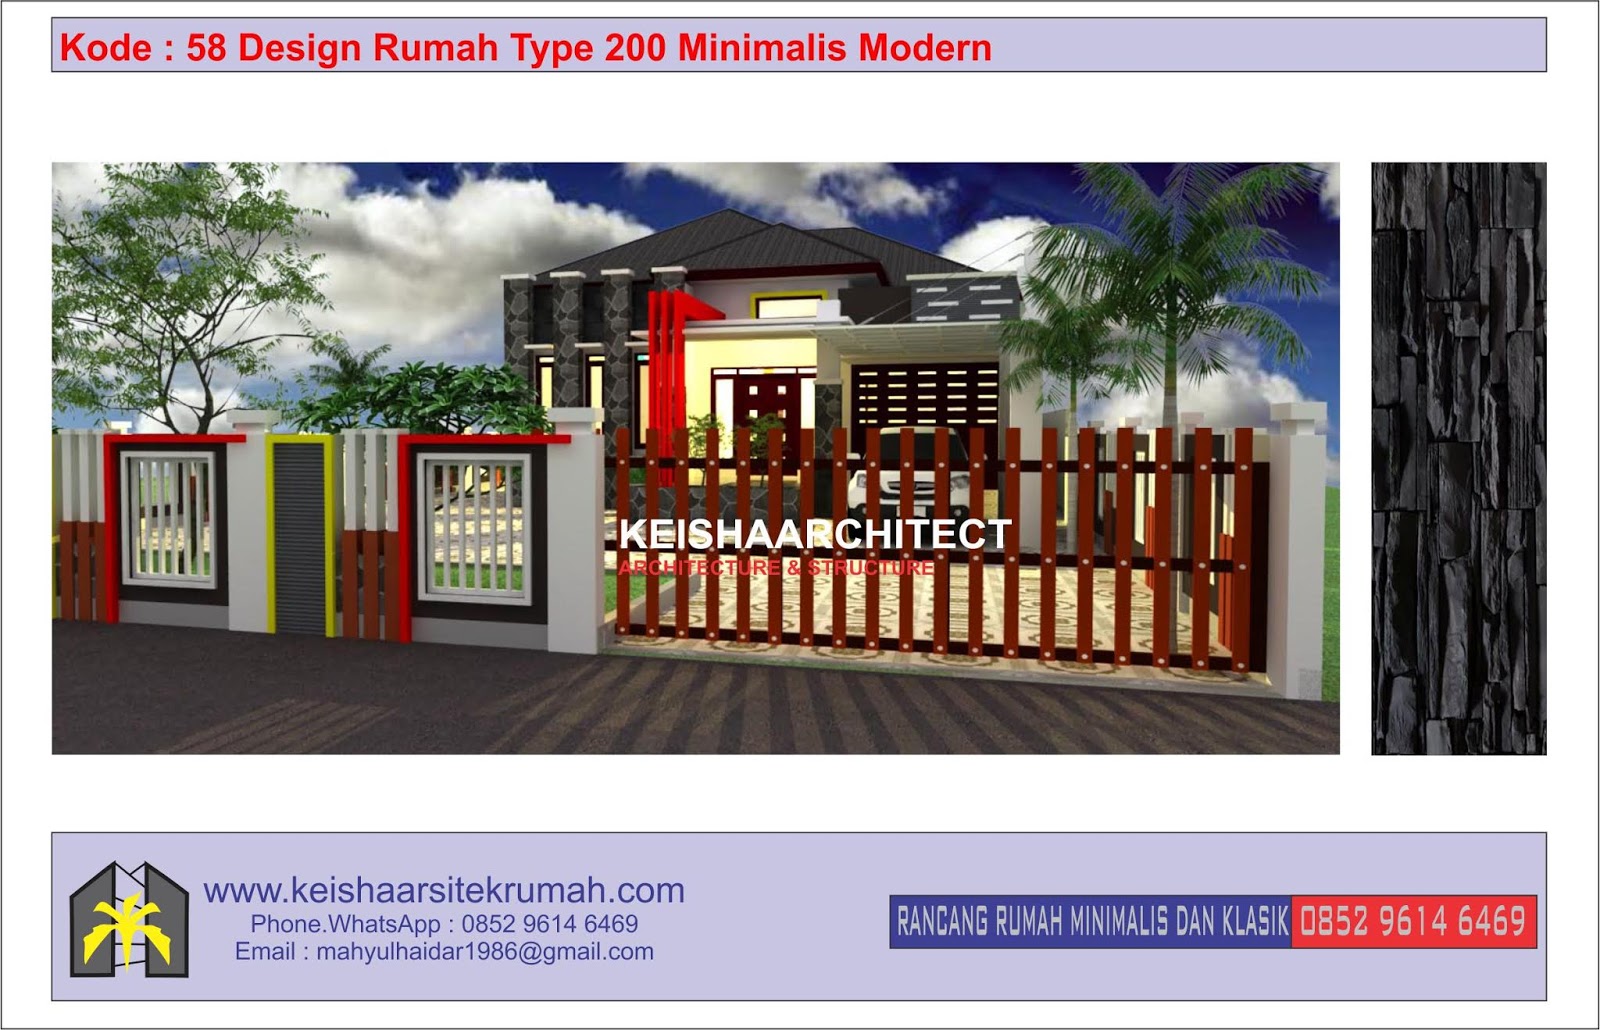 Kode 58 Design Rumah Type 200 Lokasi Bireuen Aceh Desain